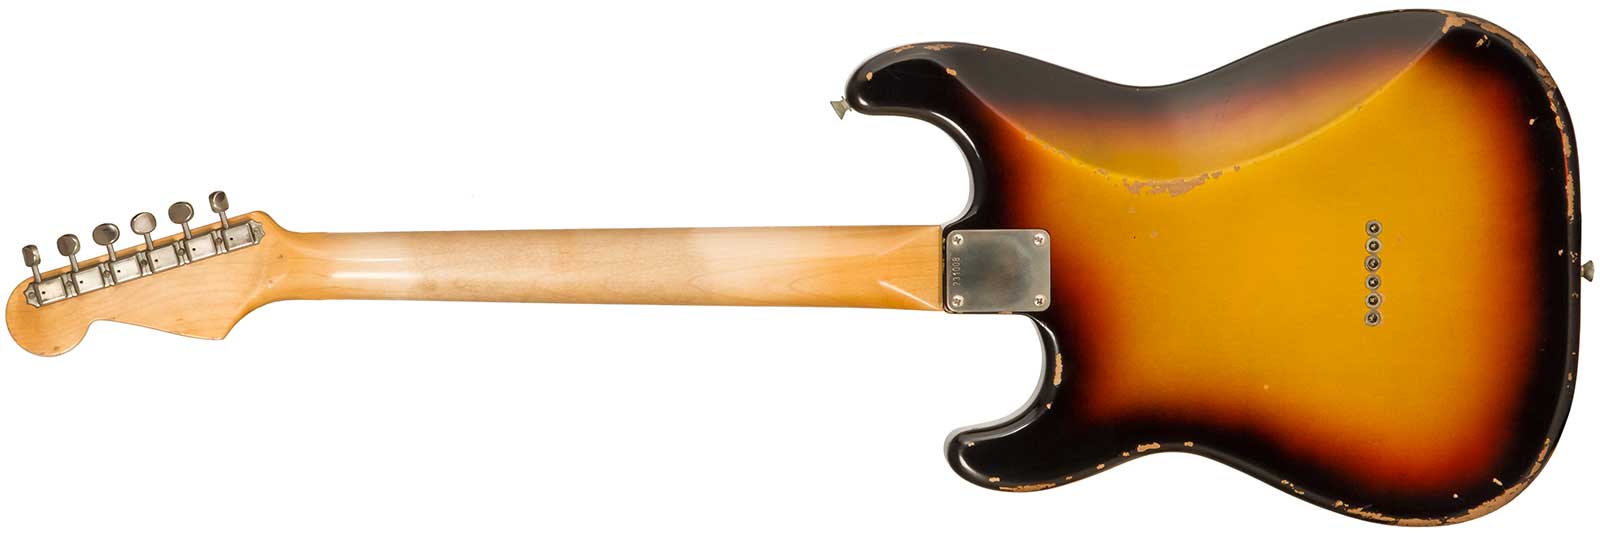 Rebelrelic S-series 1961 Hardtail 3s Ht Rw #231008 - 3-tone Sunburst - Str shape electric guitar - Variation 1